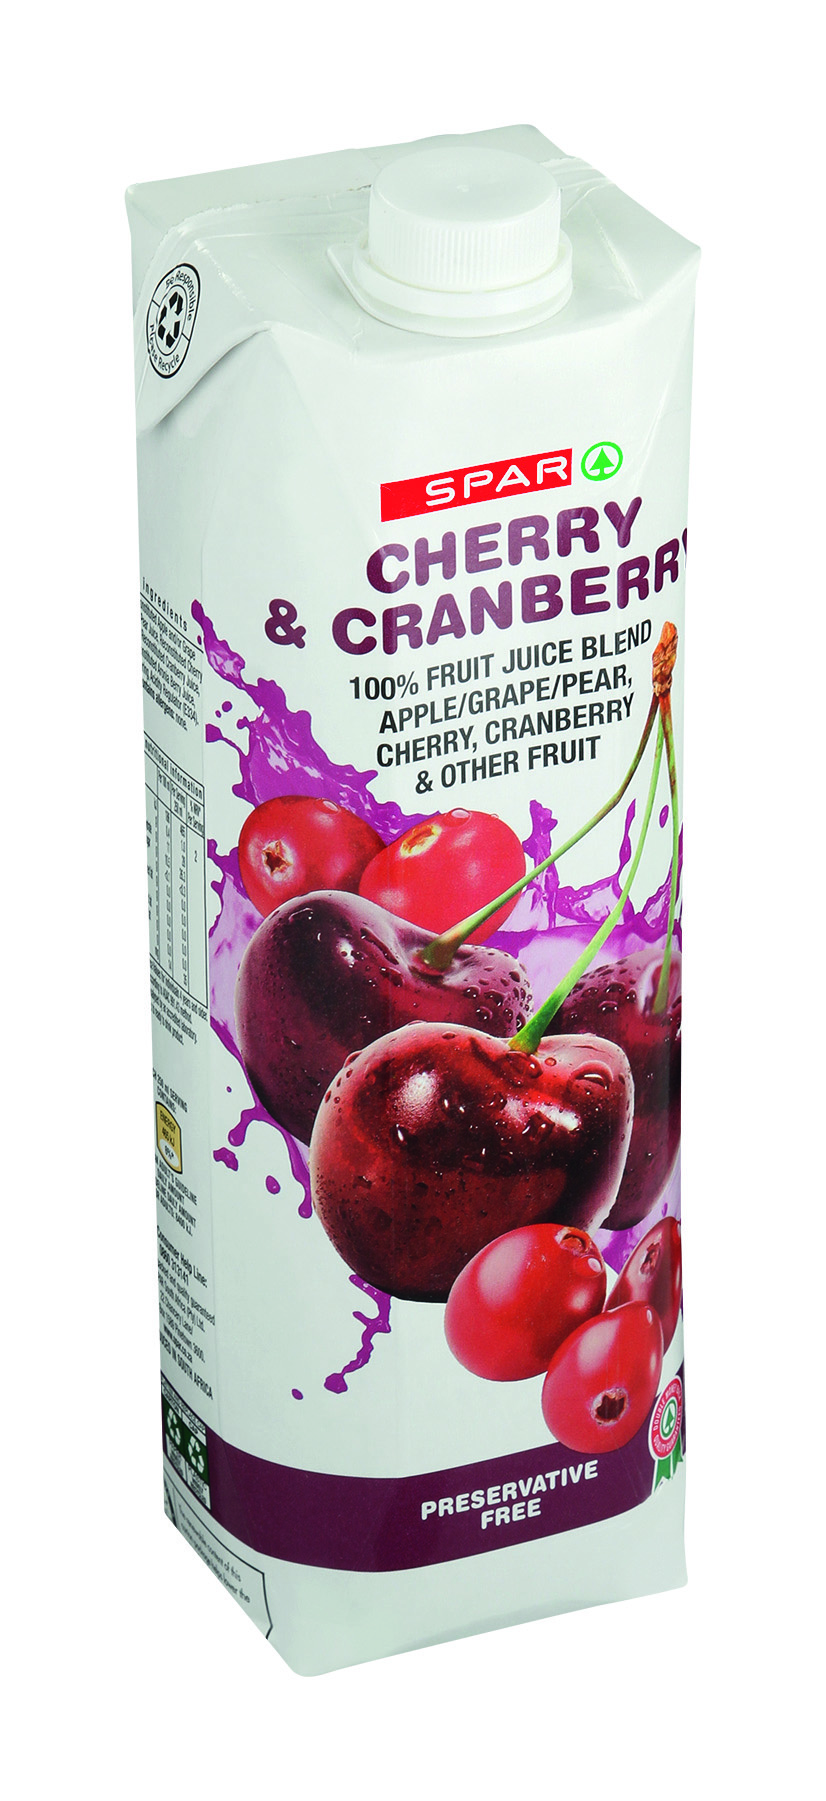 juice blend - cherry & cranberry